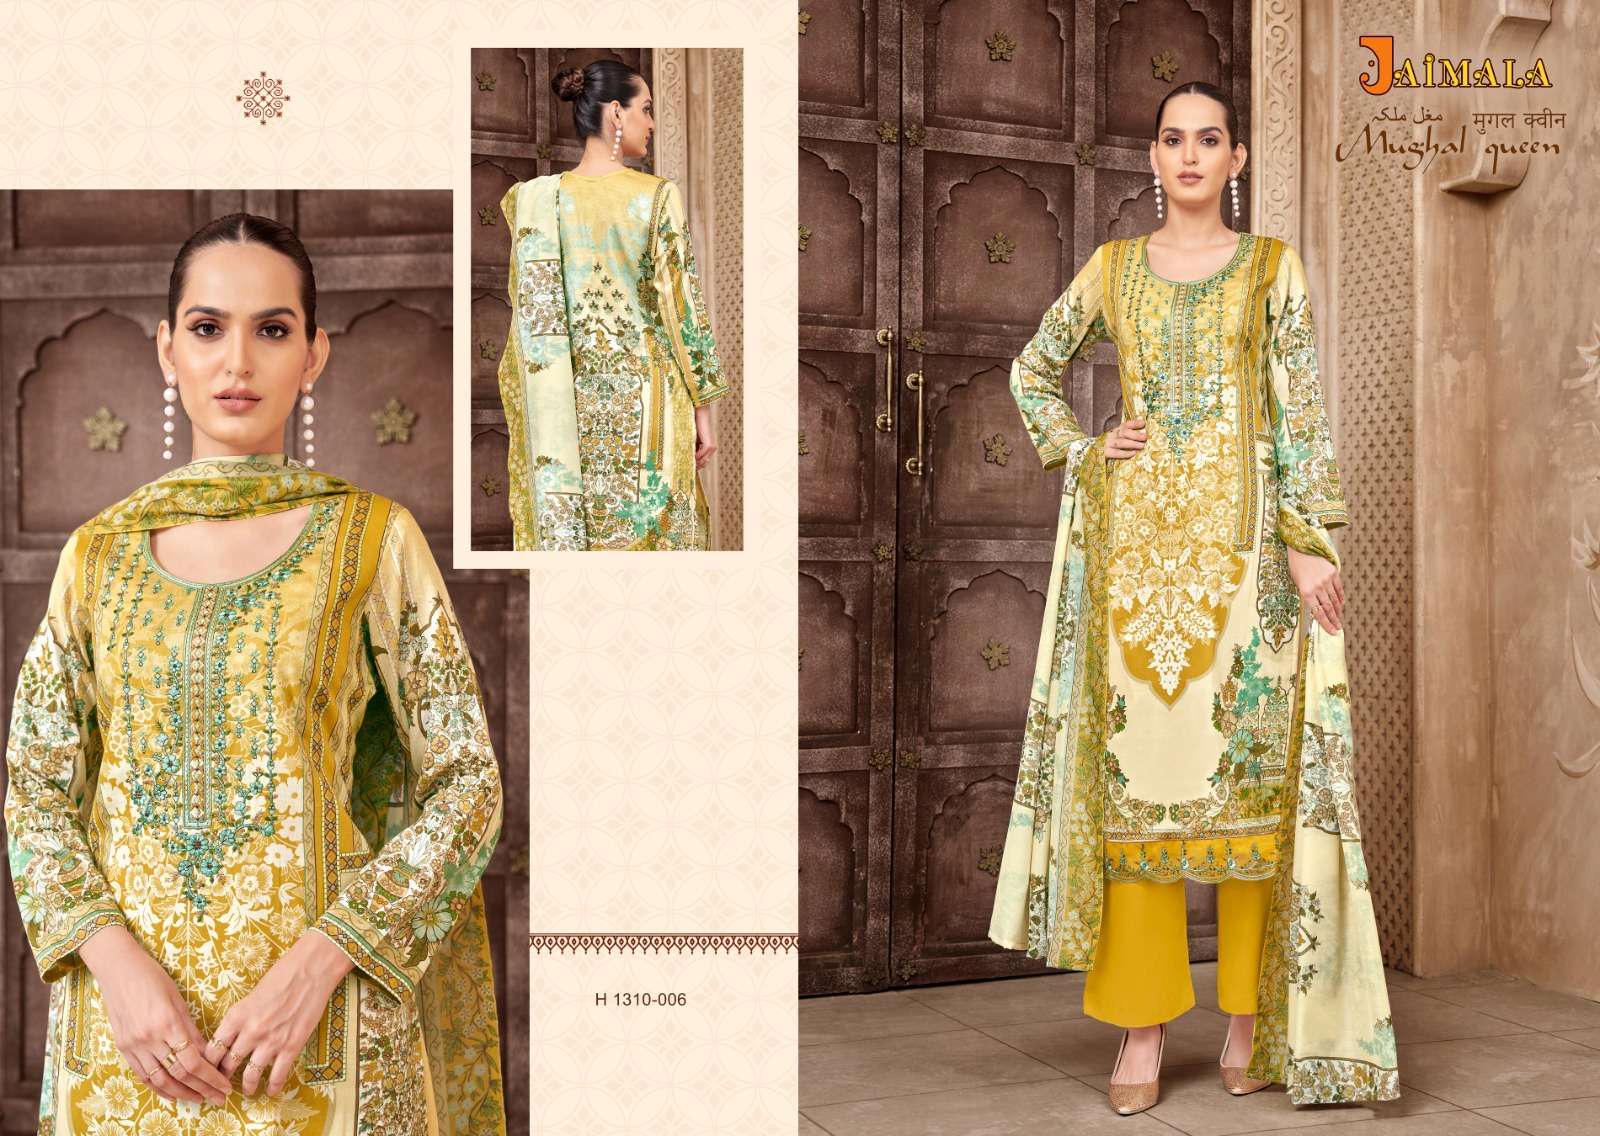 jaimala mughal queen stylish designer pakistani salwar suits catalogue collection surat 